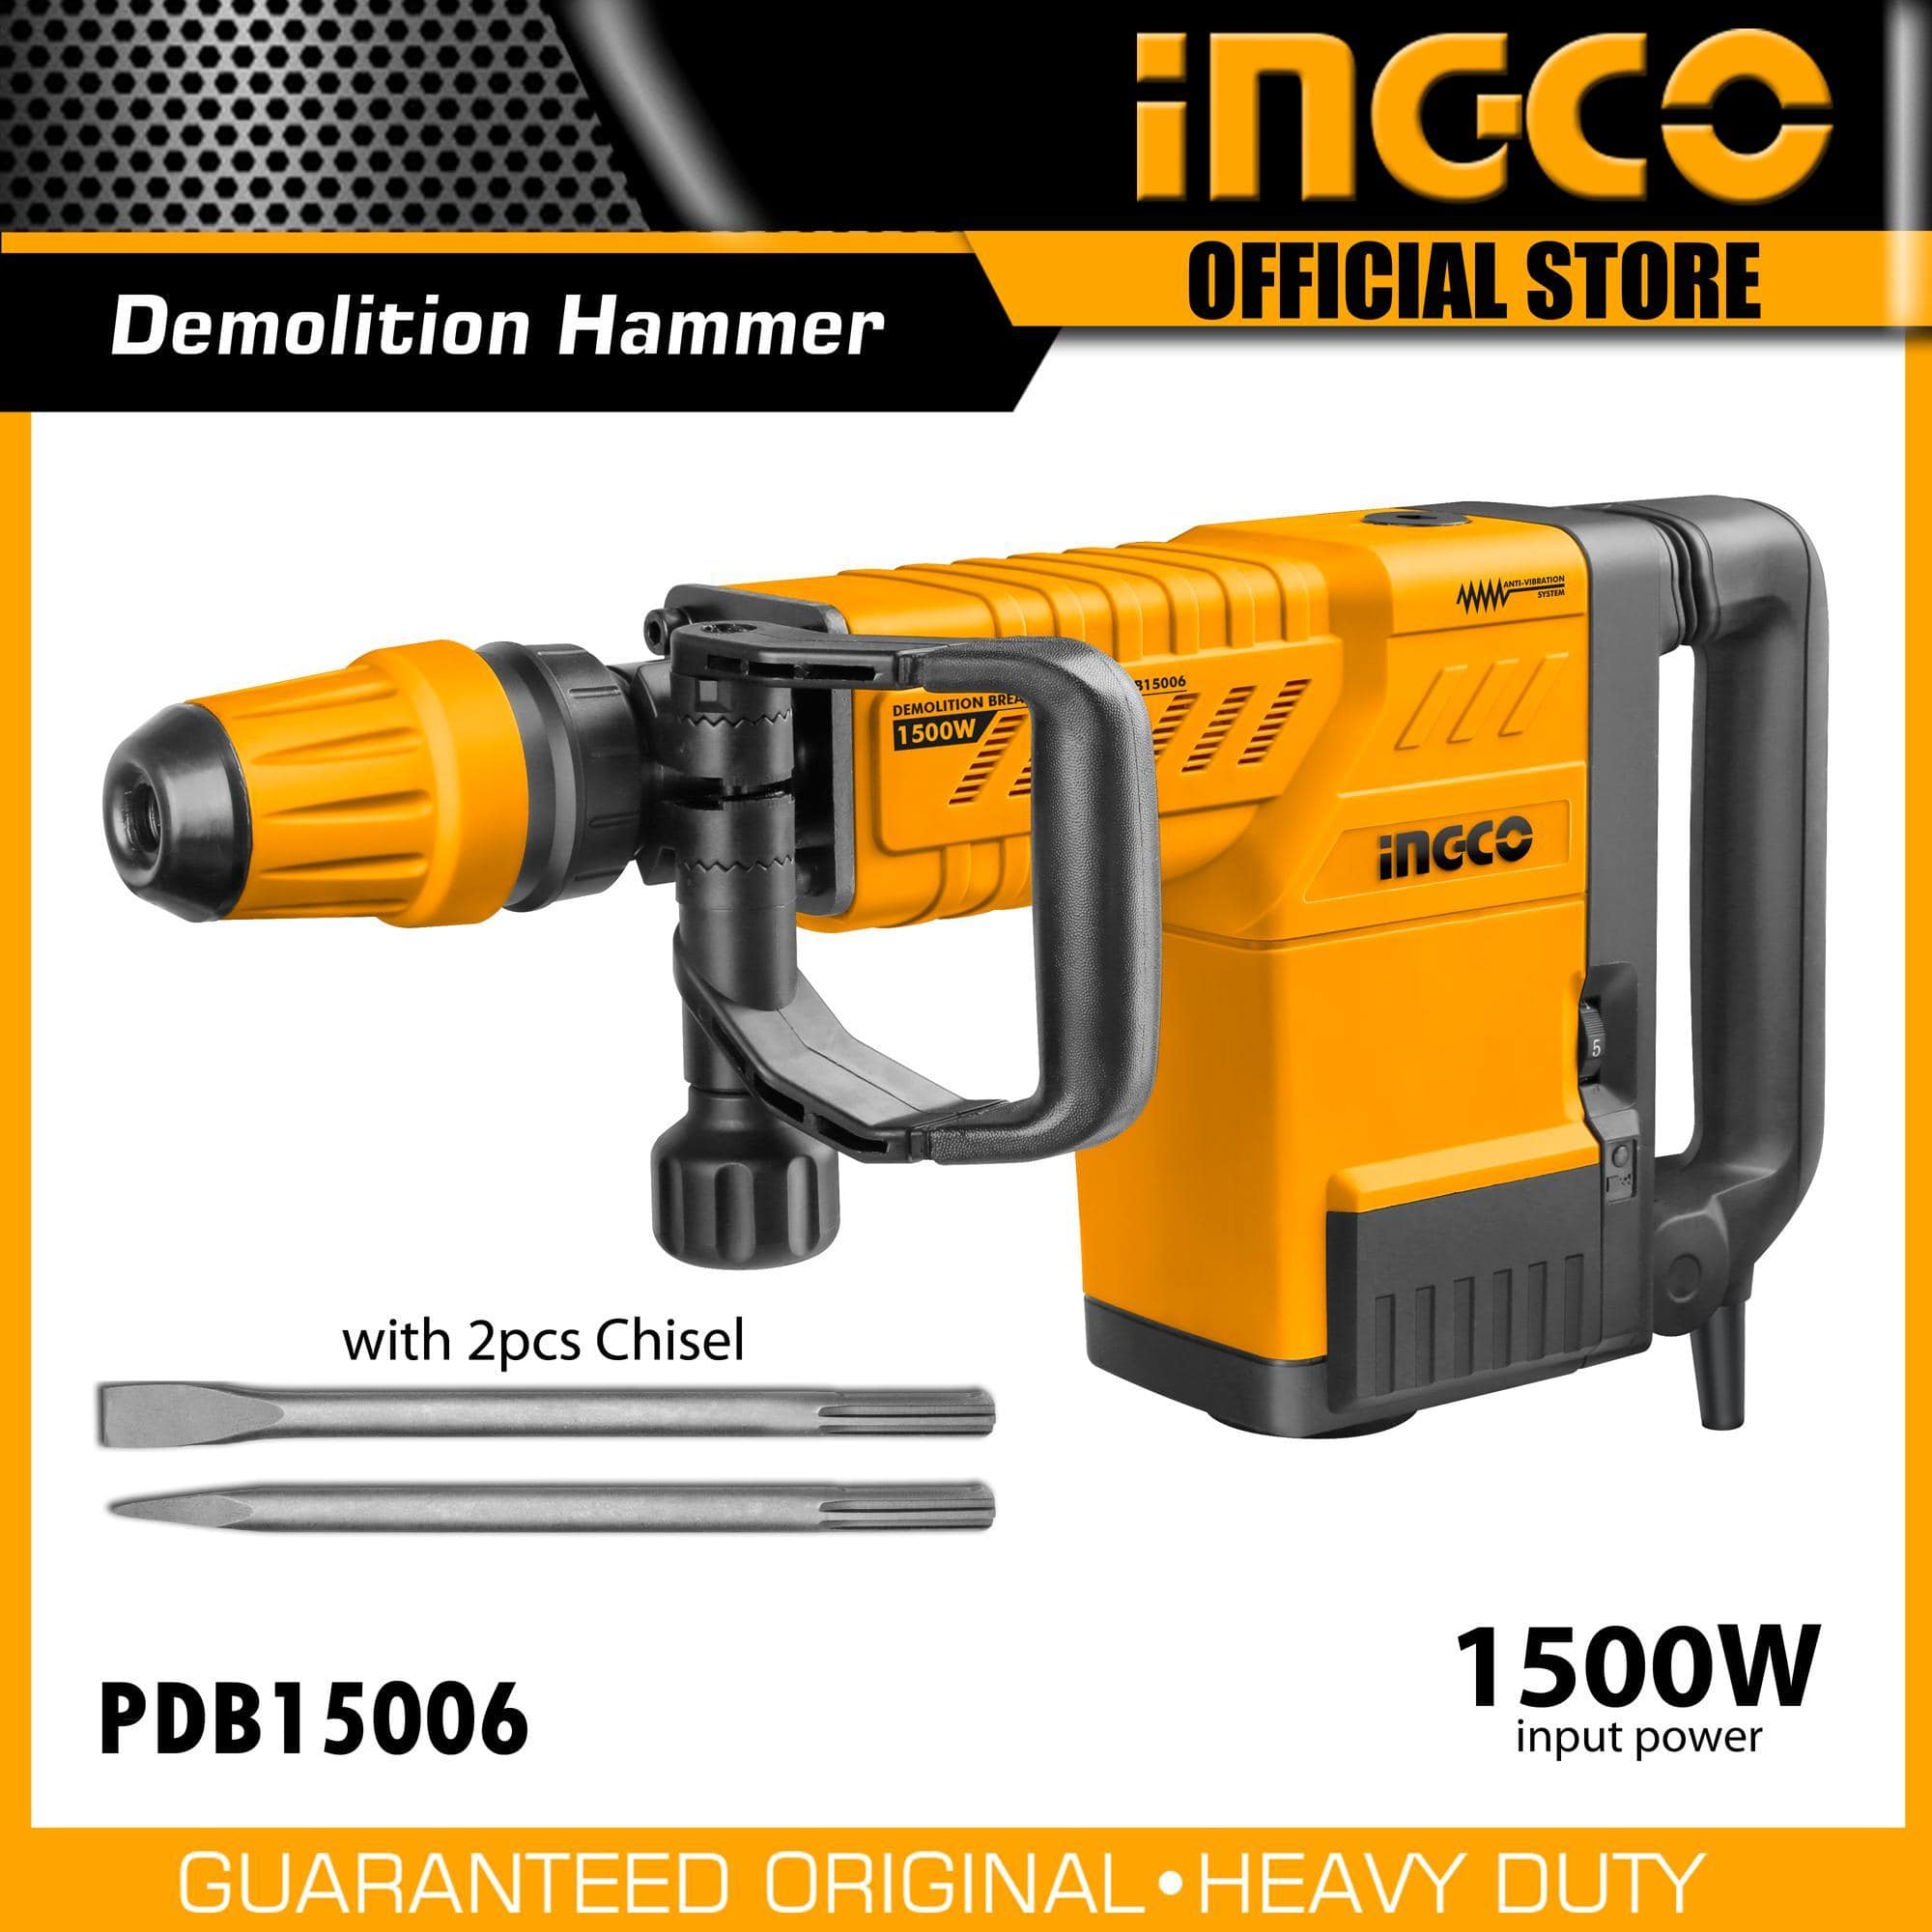 Ingco Demolition Breaker 1500W - PDB15006 | Supply Master | Accra, Ghana Tools Building Steel Engineering Hardware tool